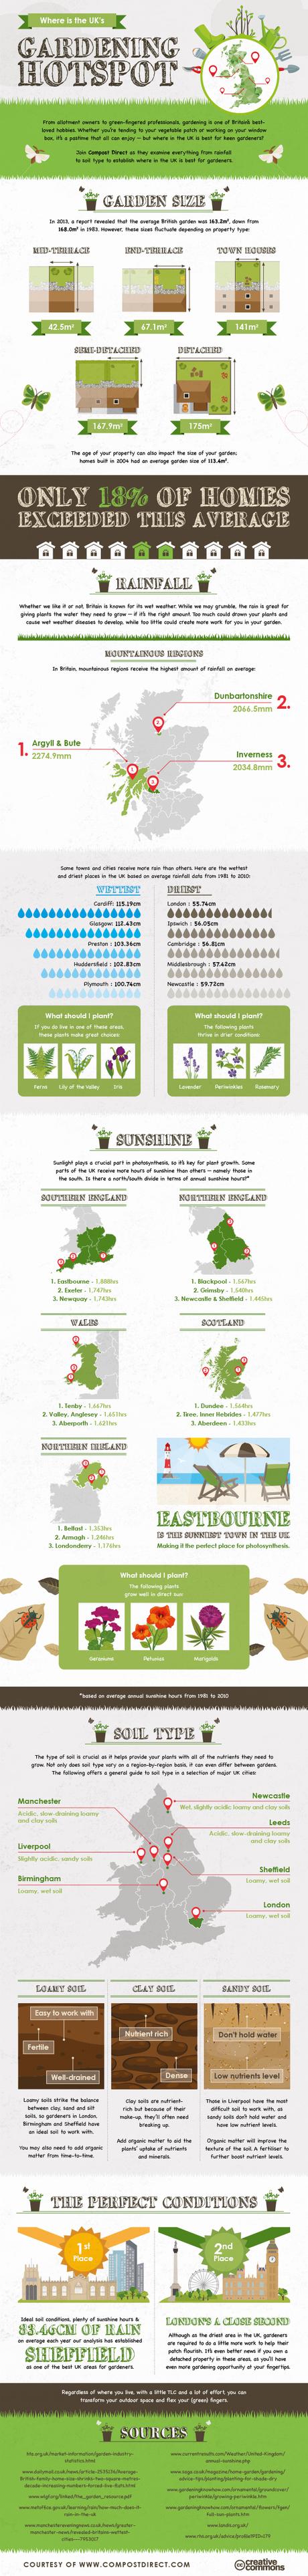 Sheffield tops the list of UK gardening hotspots